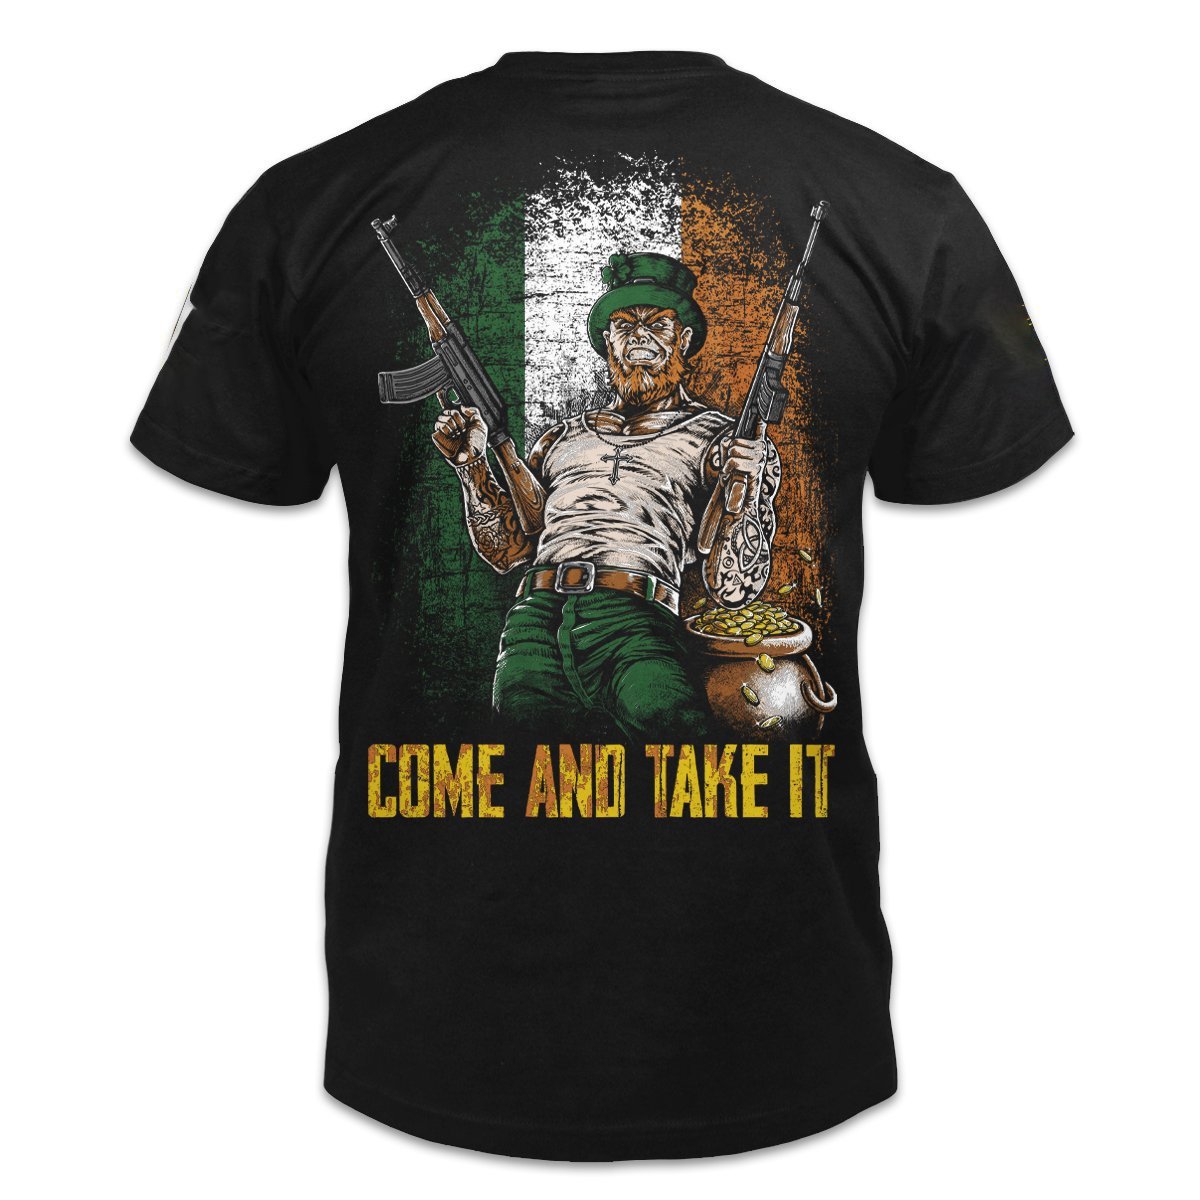 Veteran Shirt, Irish Shirt, Come And Take It T-Shirt KM0908